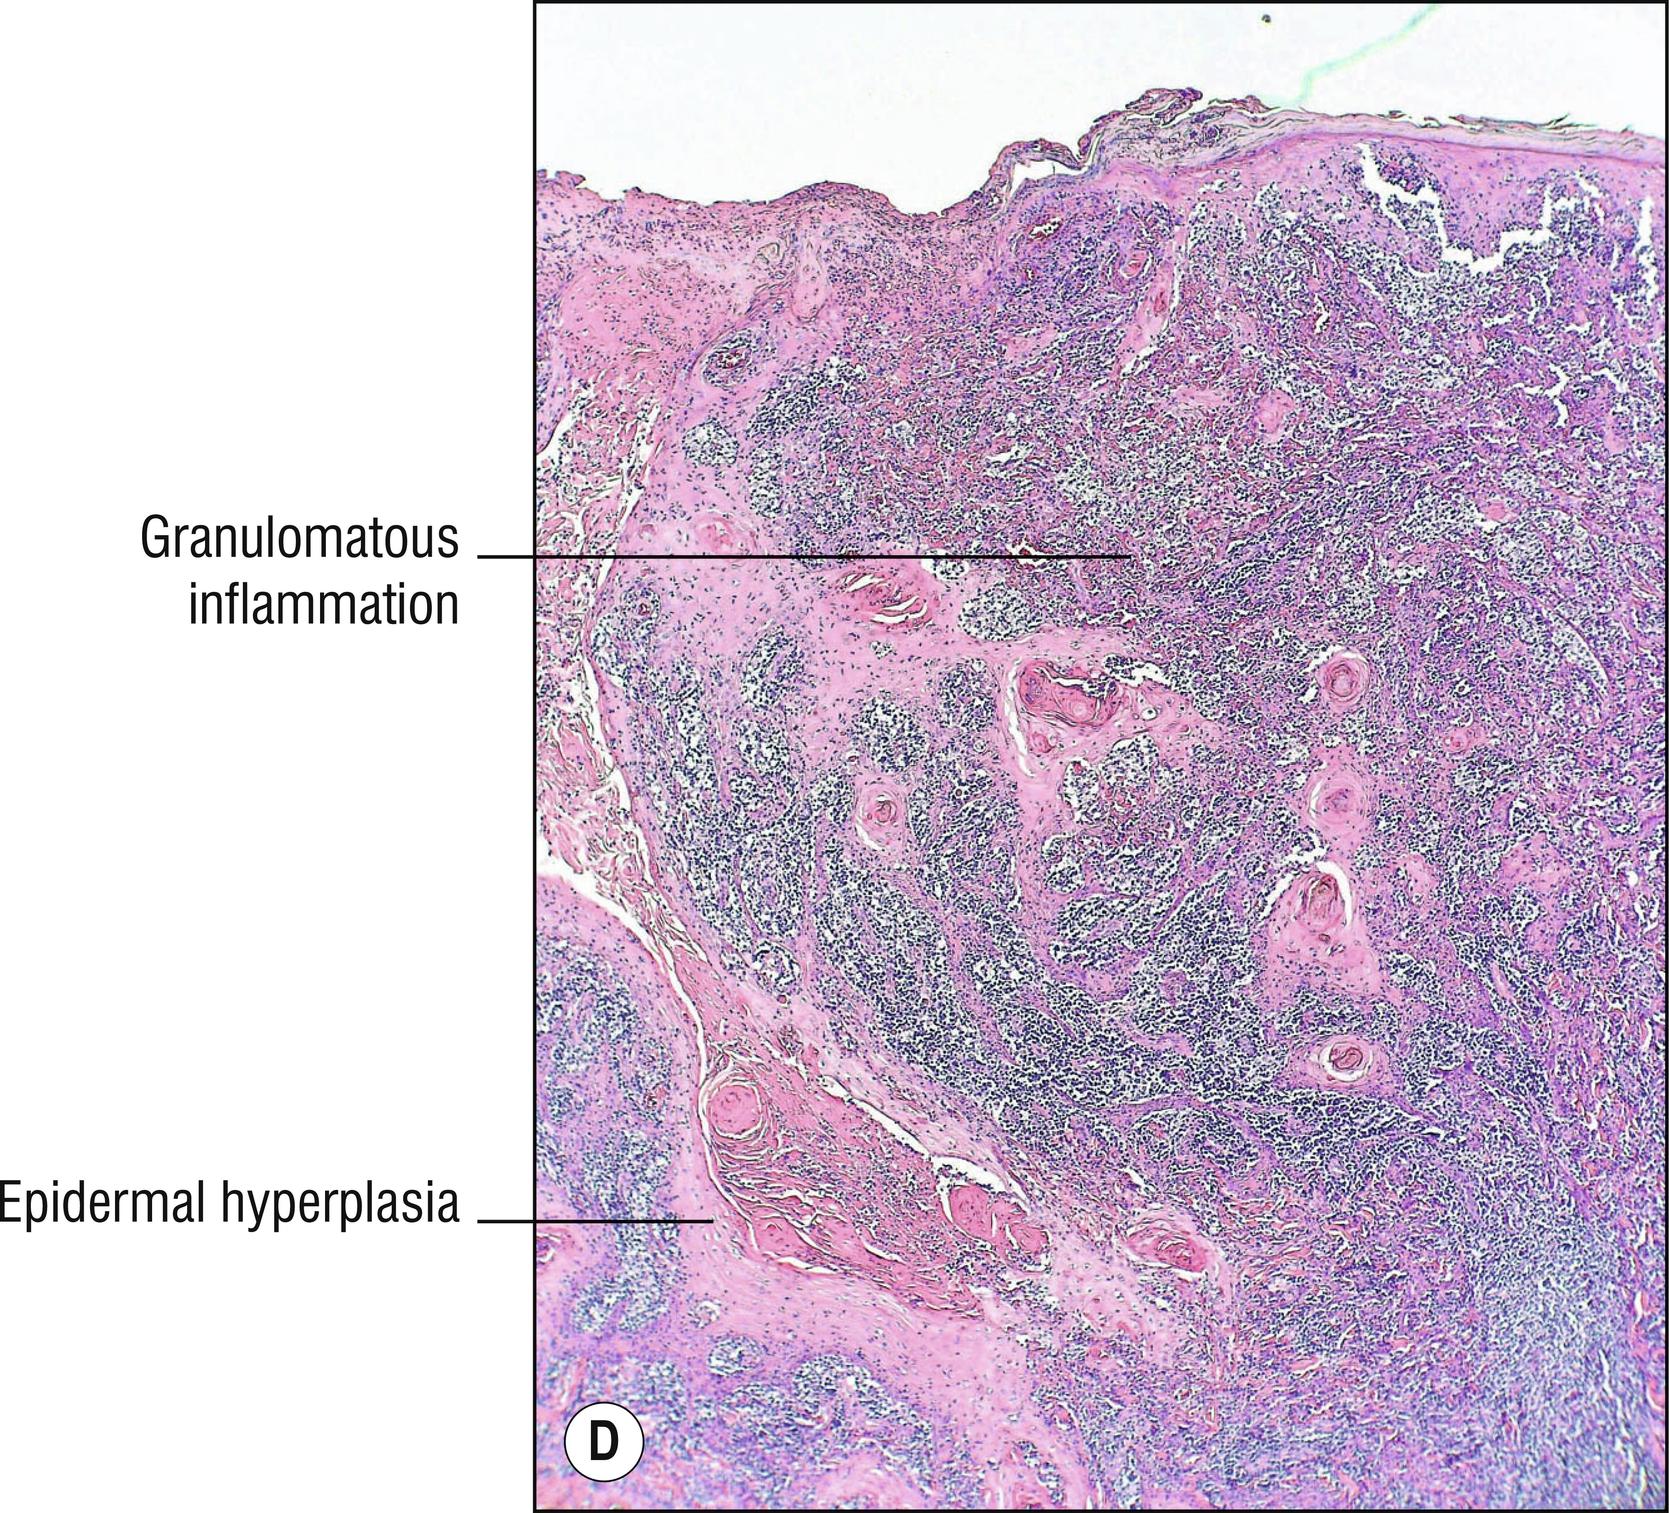 Fig. 15.1, D Pseudocarcinomatous hyperplasia and granulomatous inflammation in leishmaniasis.